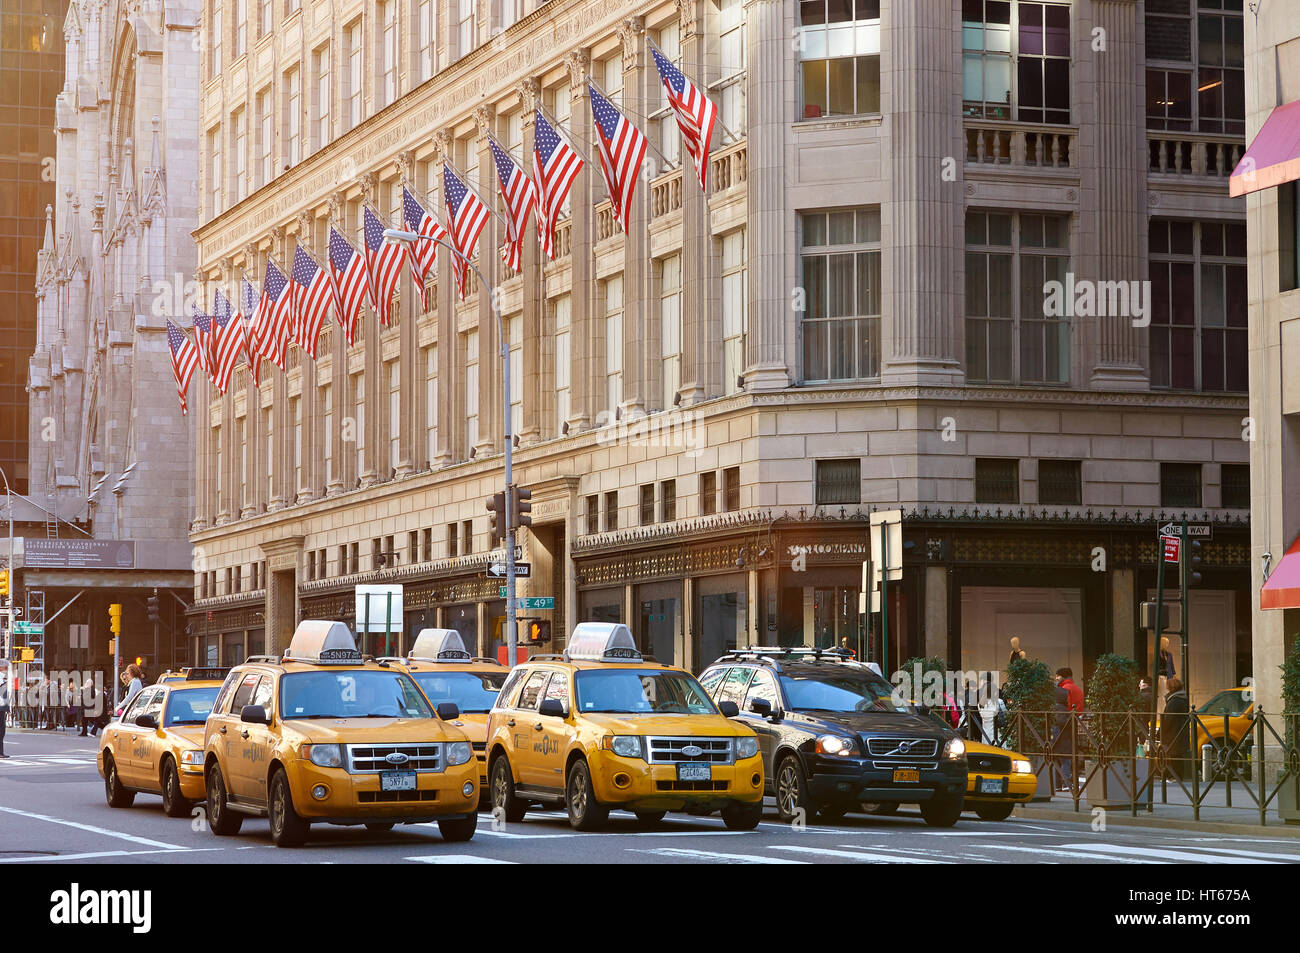 New York, USA - January 28, 2012: Yellow cabs on New York street on sunny day Stock Photo